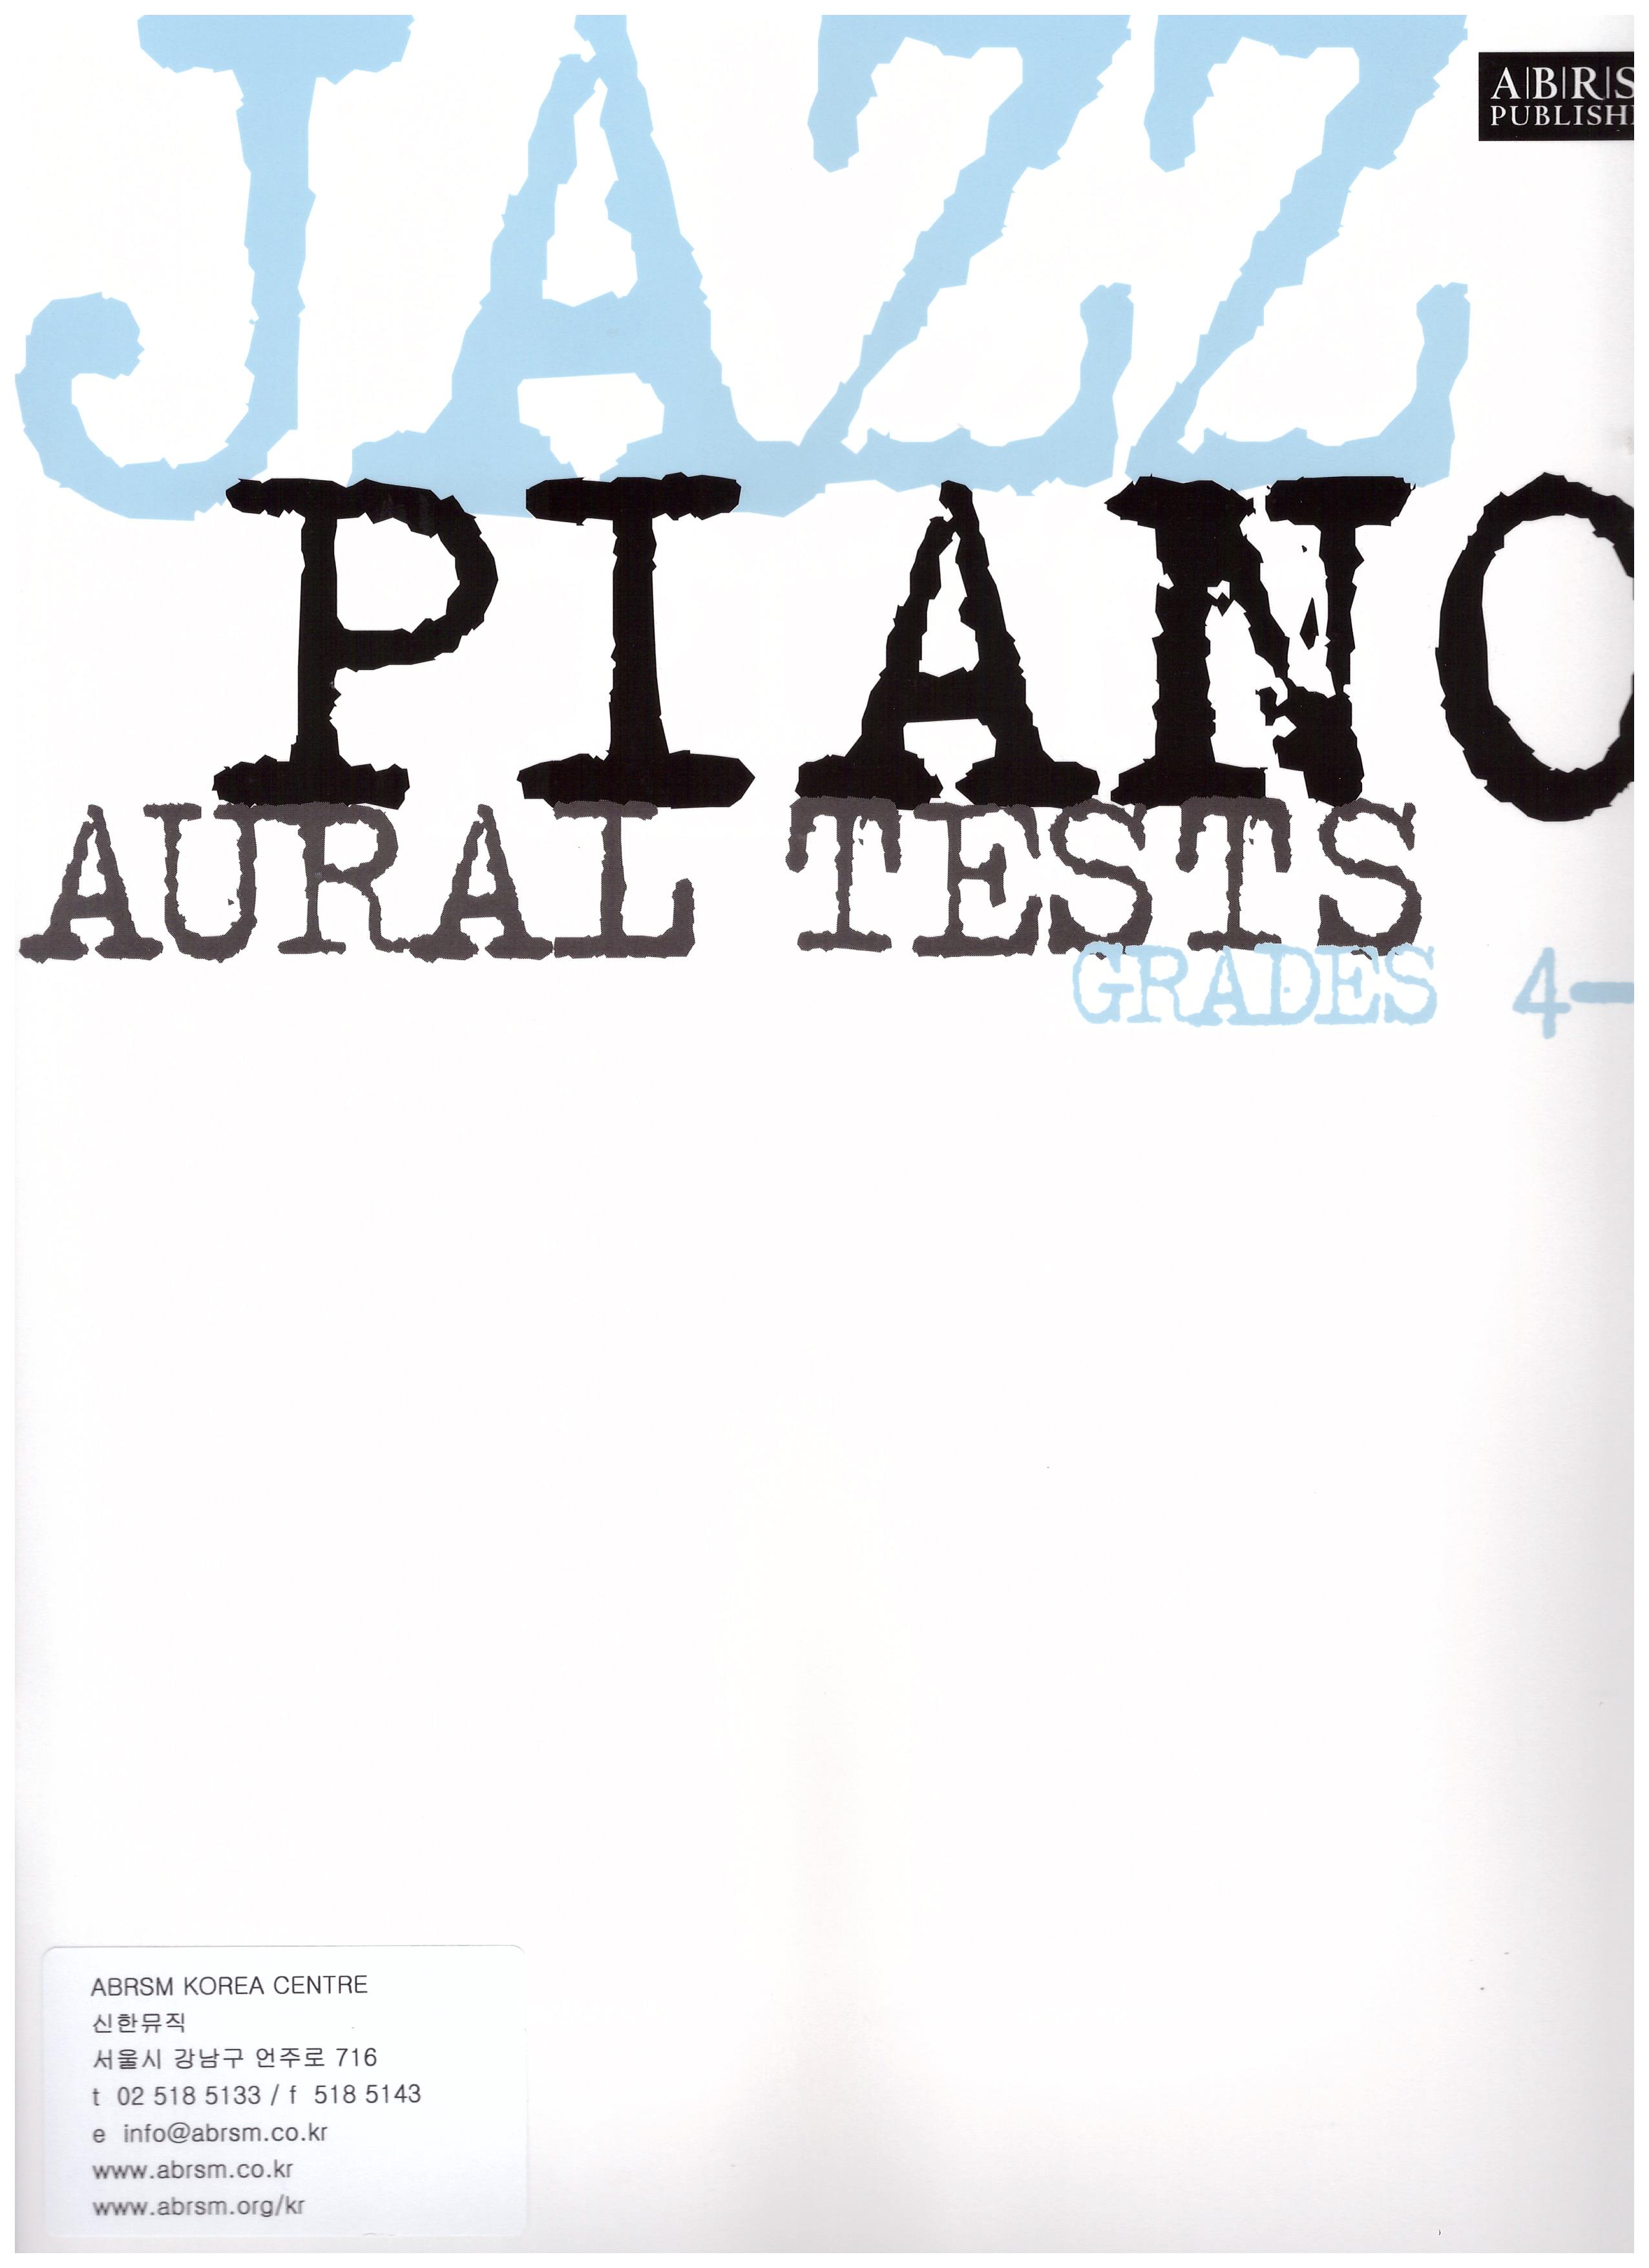 Jazz Piano Aural Tests G4-5